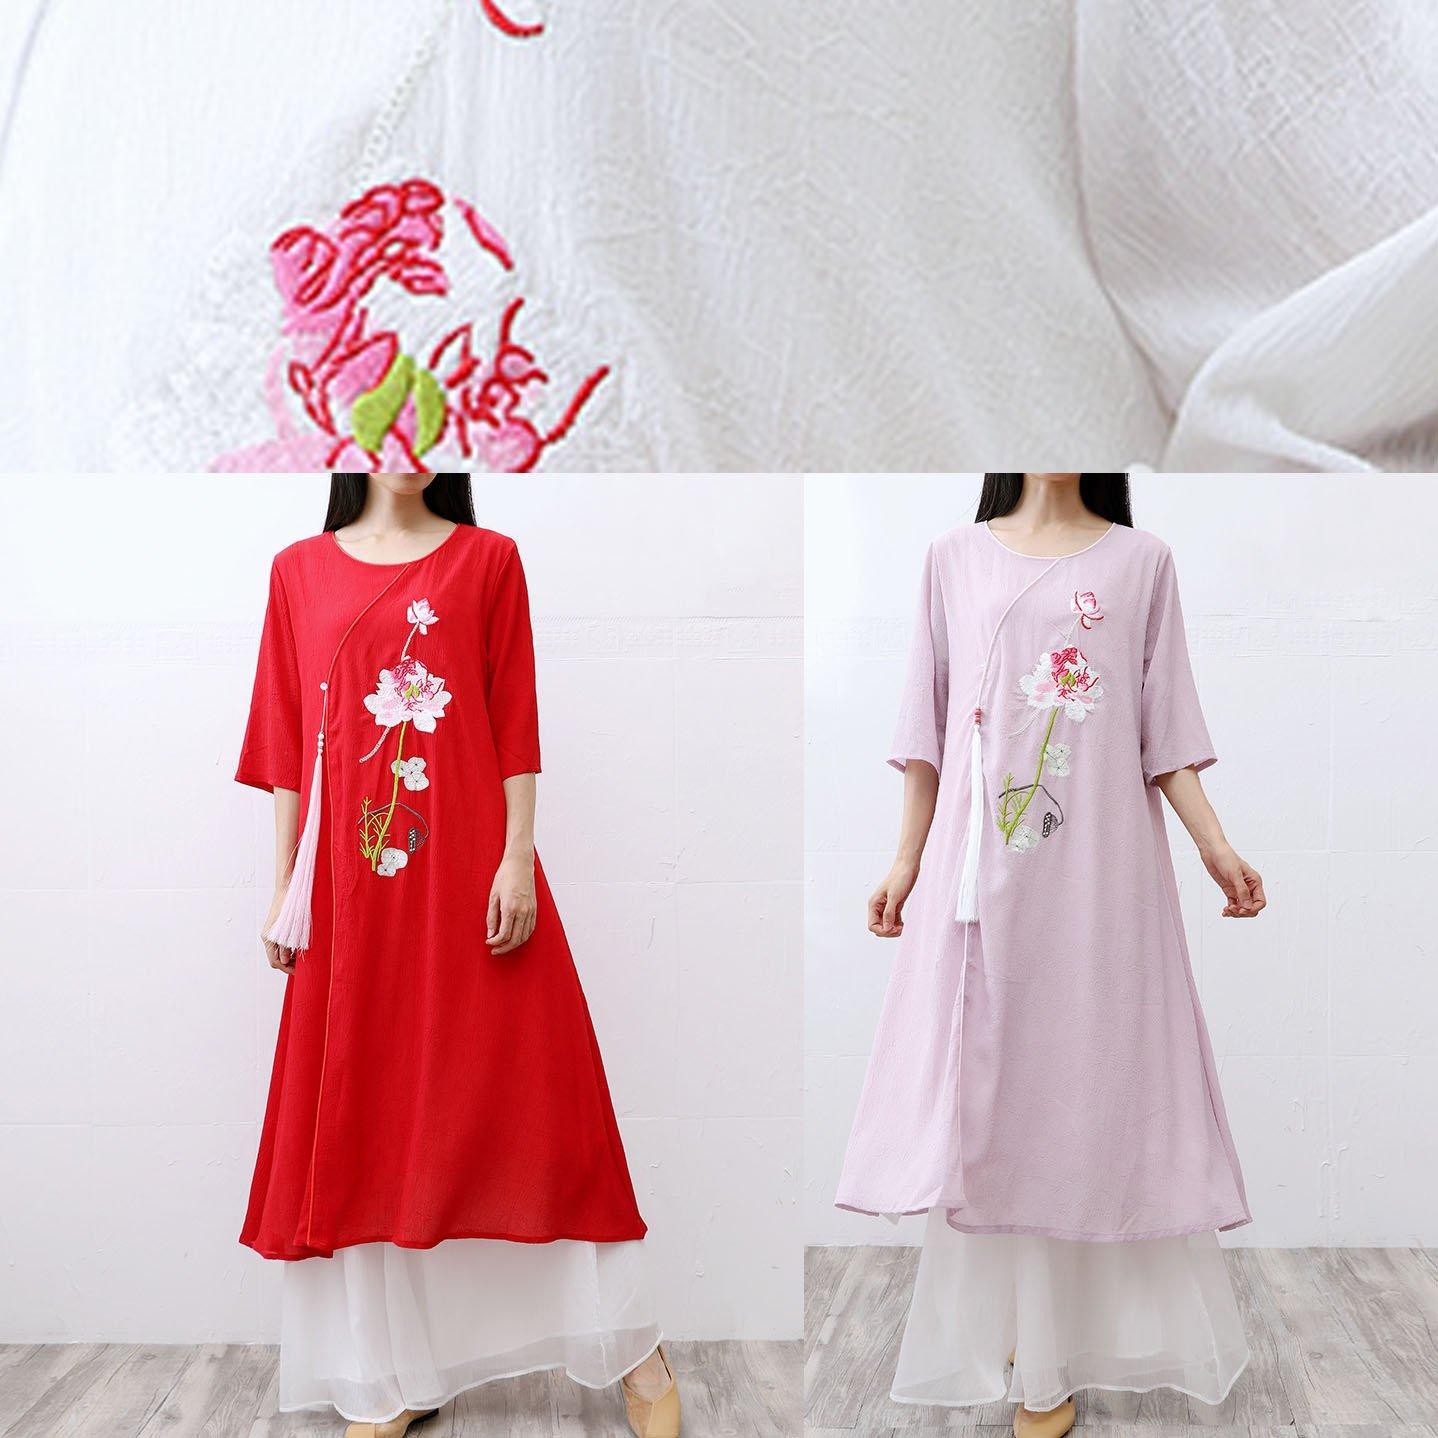 Women embroidery chiffon dresses Wardrobes red o neck Dress summer - Omychic